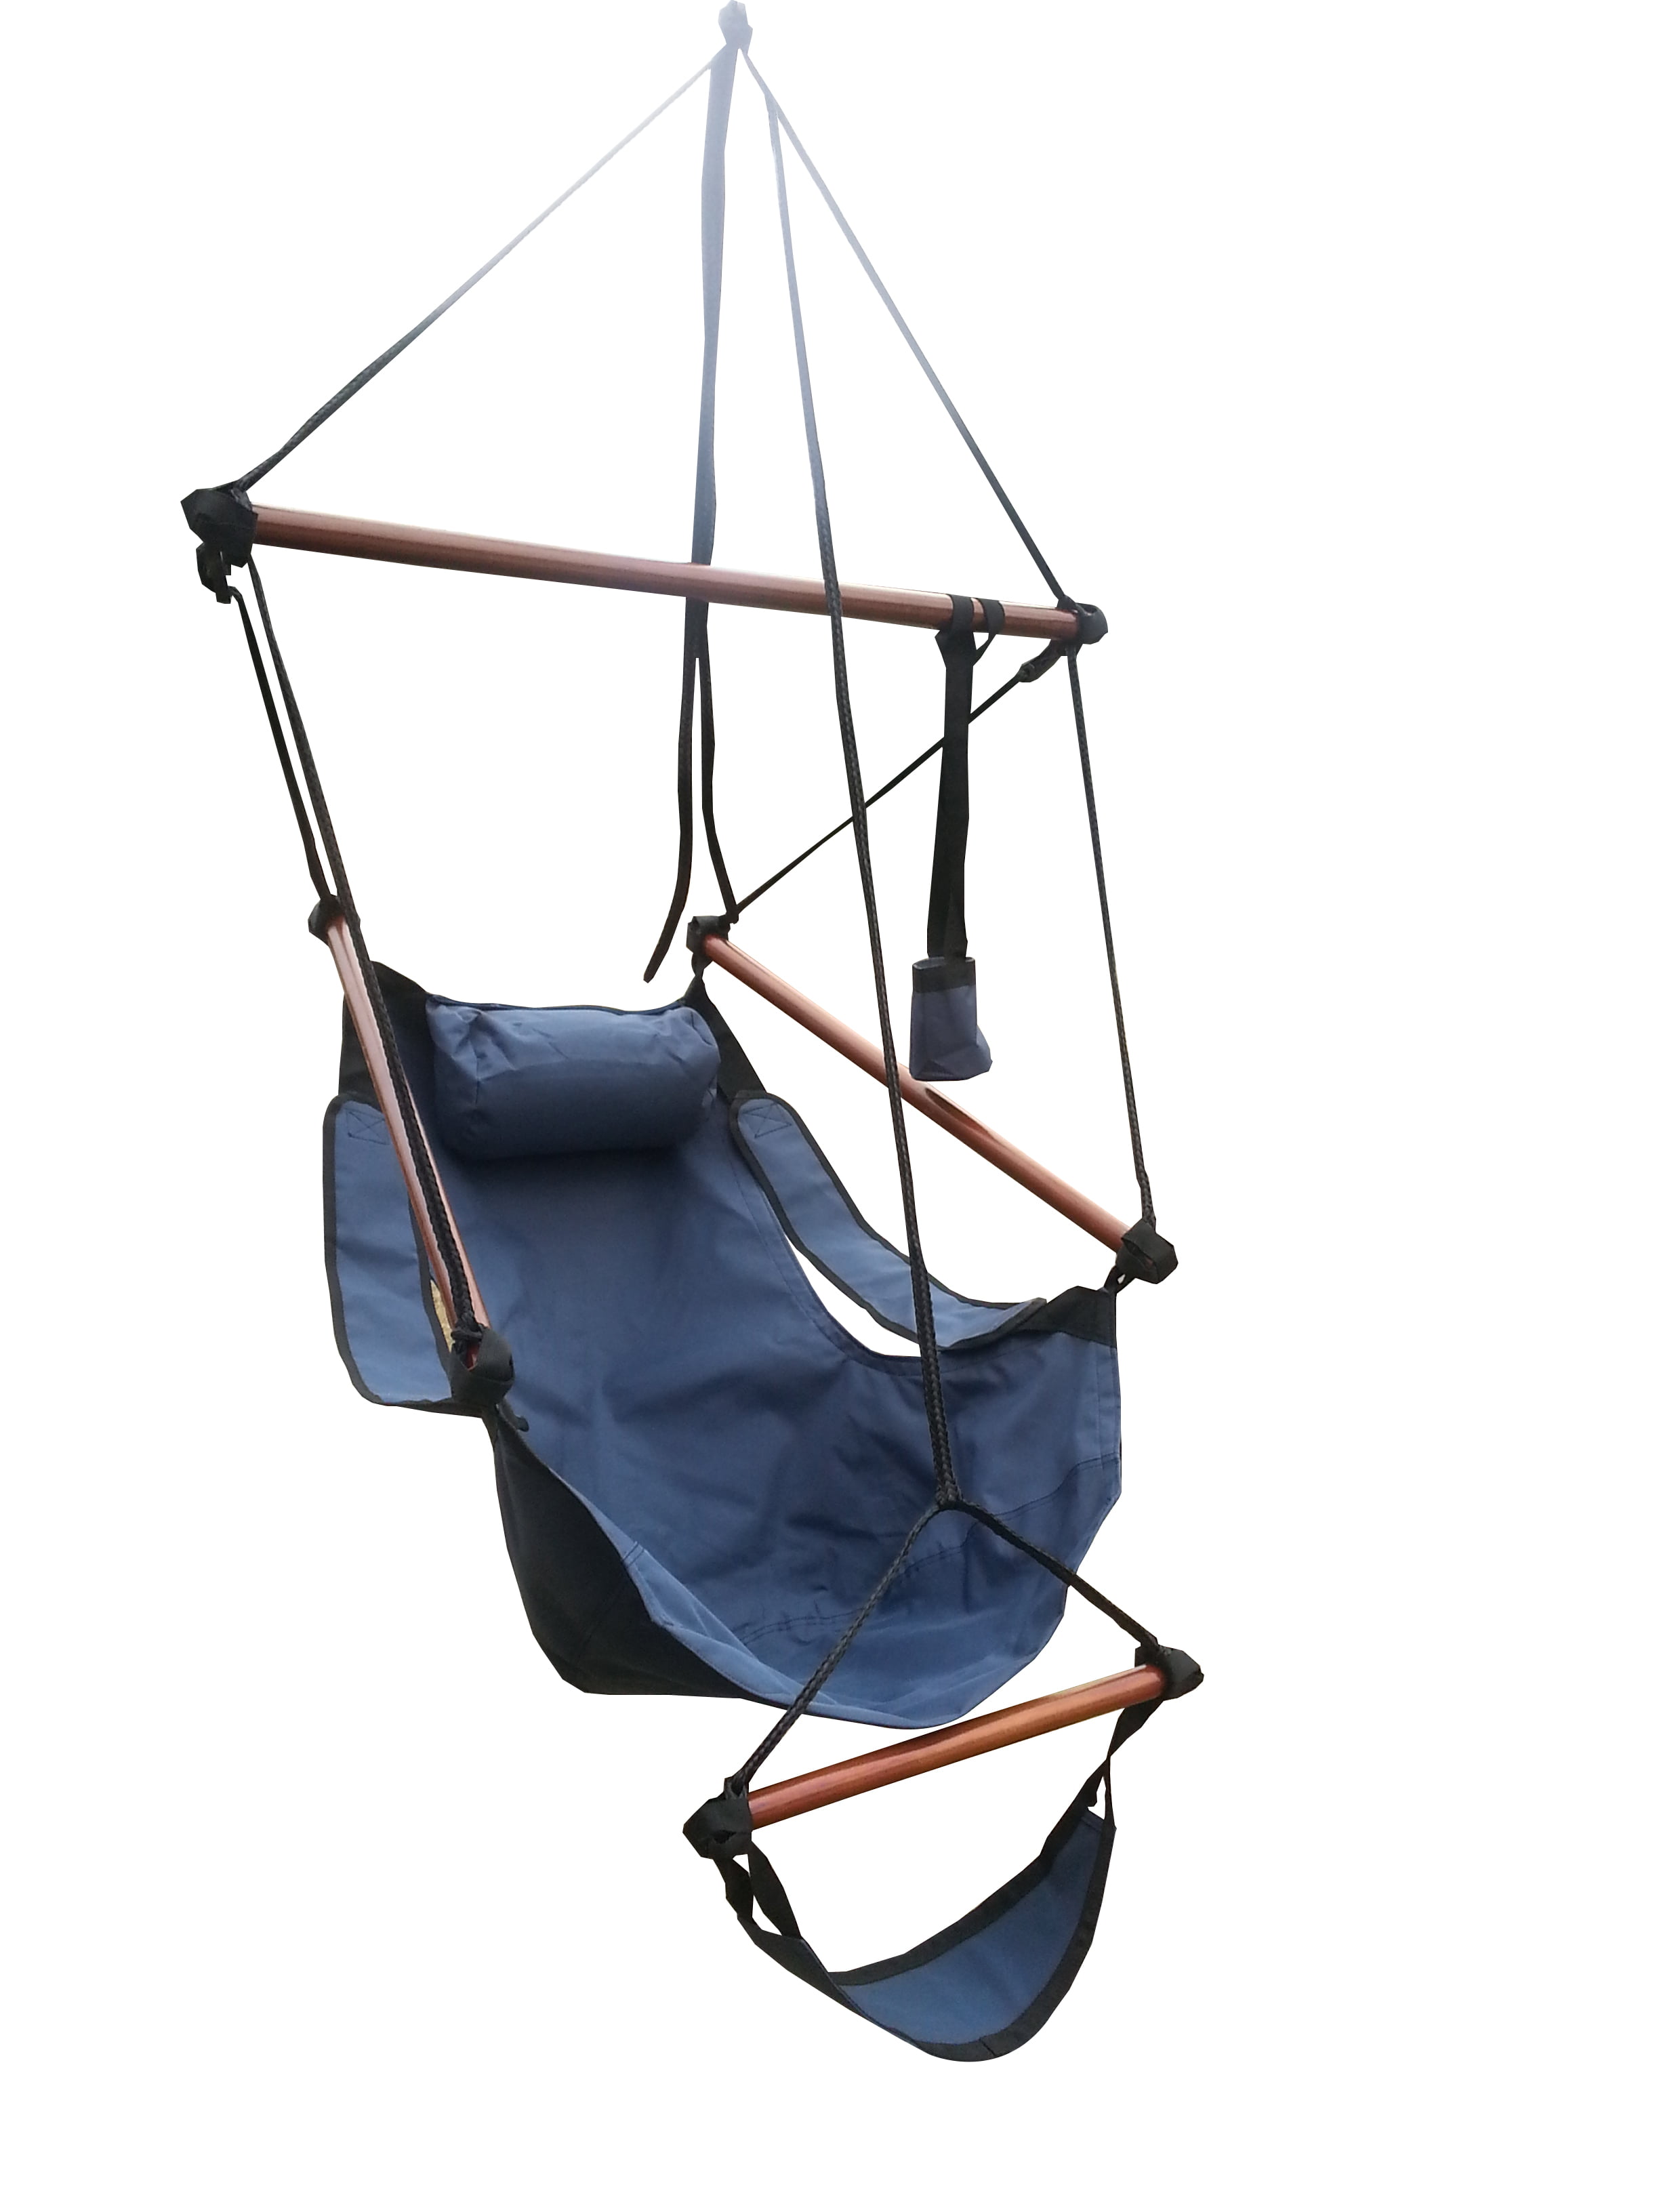 Palm Springs Sky Air Swing Lounger Hammock Hanging Chair w